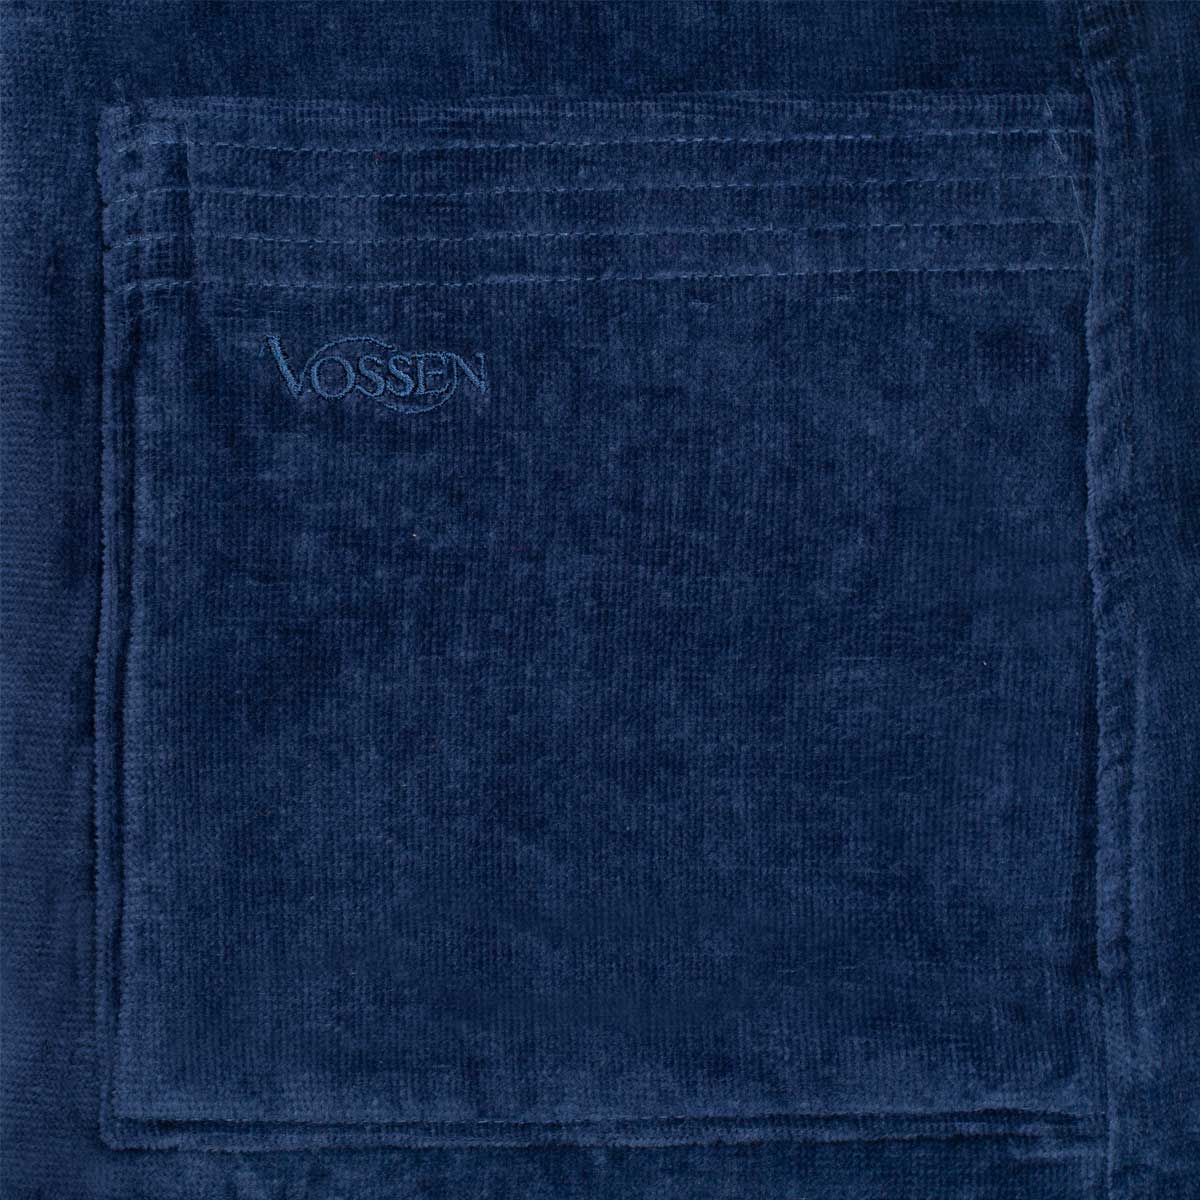 Халат махровый Vossen Texas размер XS, темно-синий Vossen 7990 05112 4760 3440 XS - фото 4